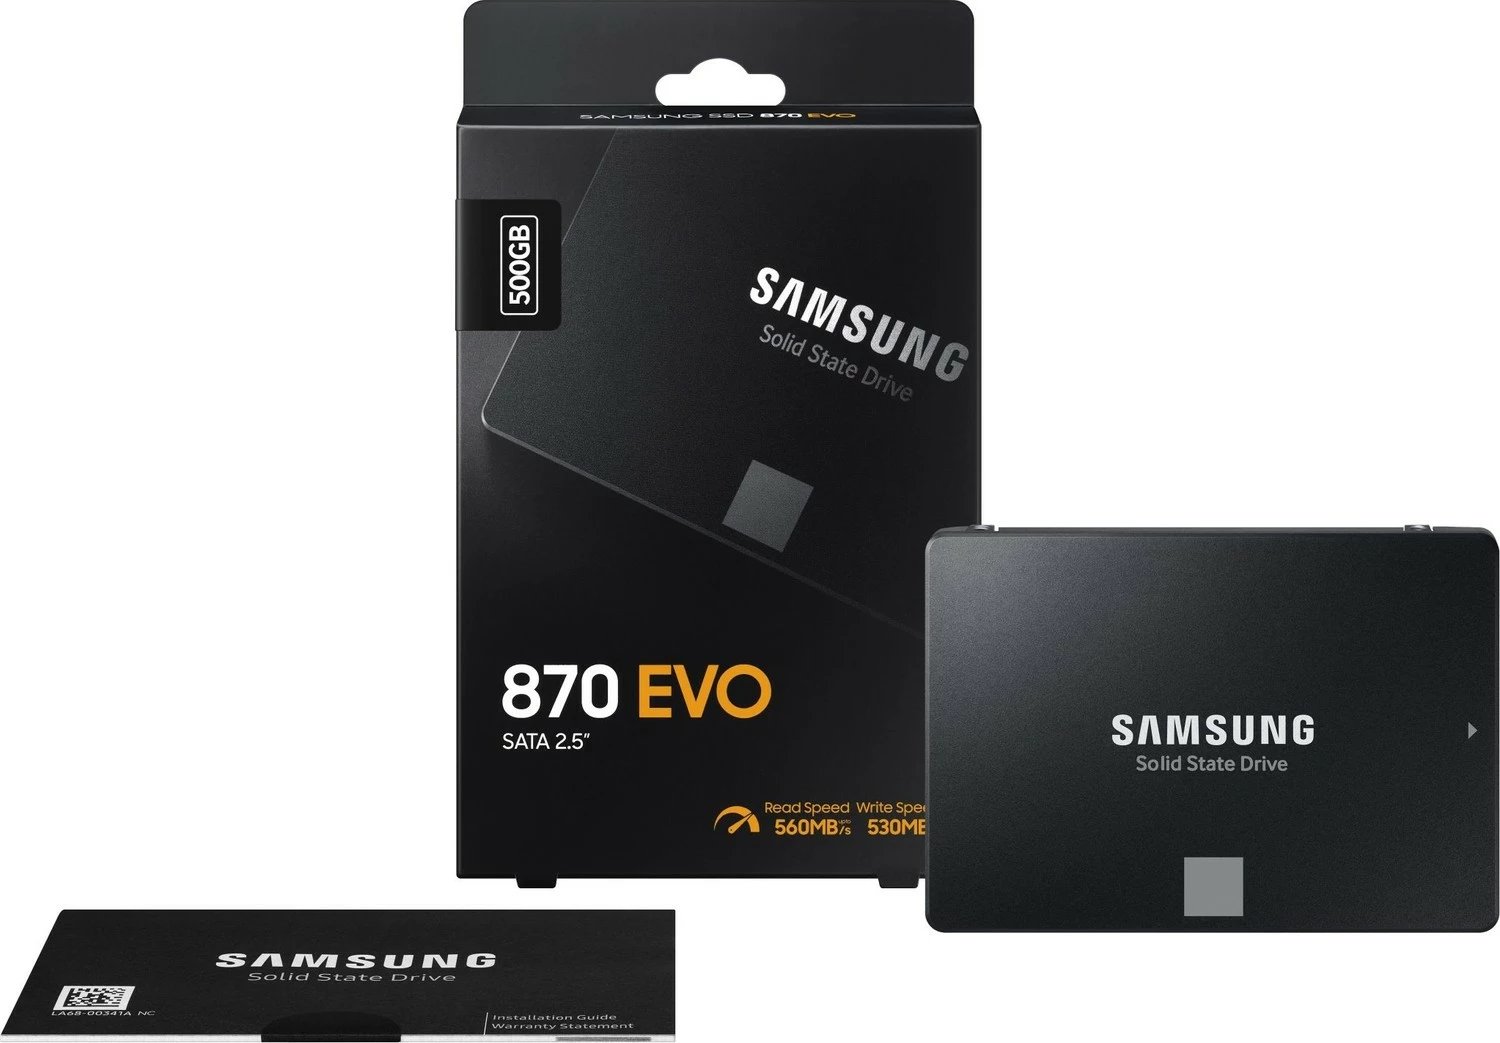 Disk i brendshëm SSD, Samsung,  560MB-530MB/s, Sata 2.5" , 500GB